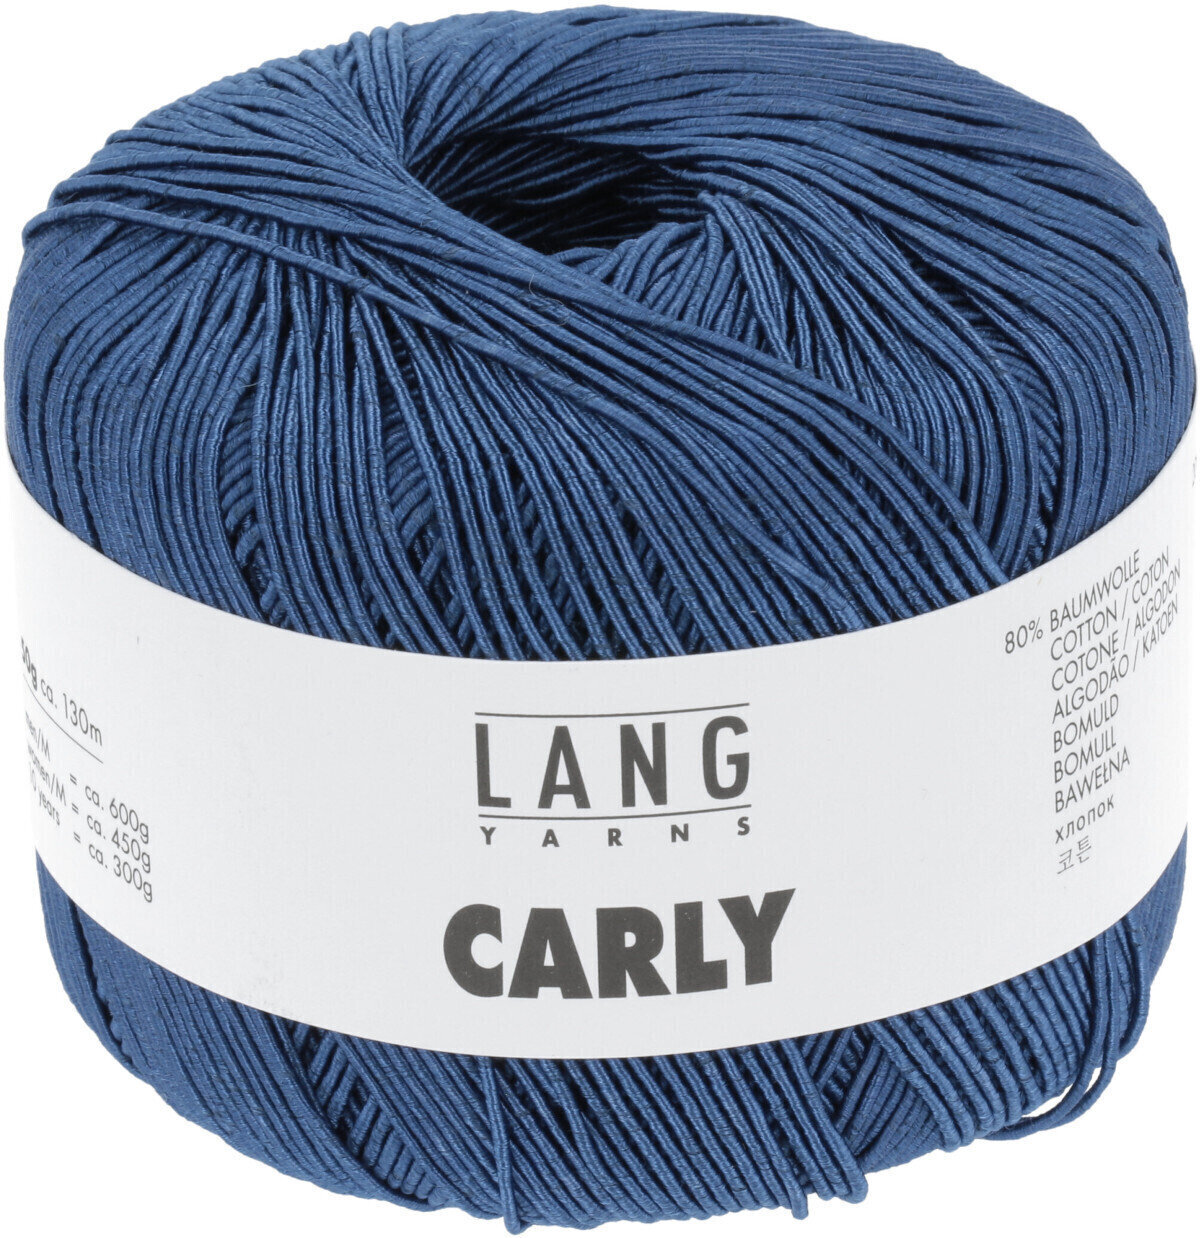 Neulelanka Lang Yarns Carly 0035 Blue Marine